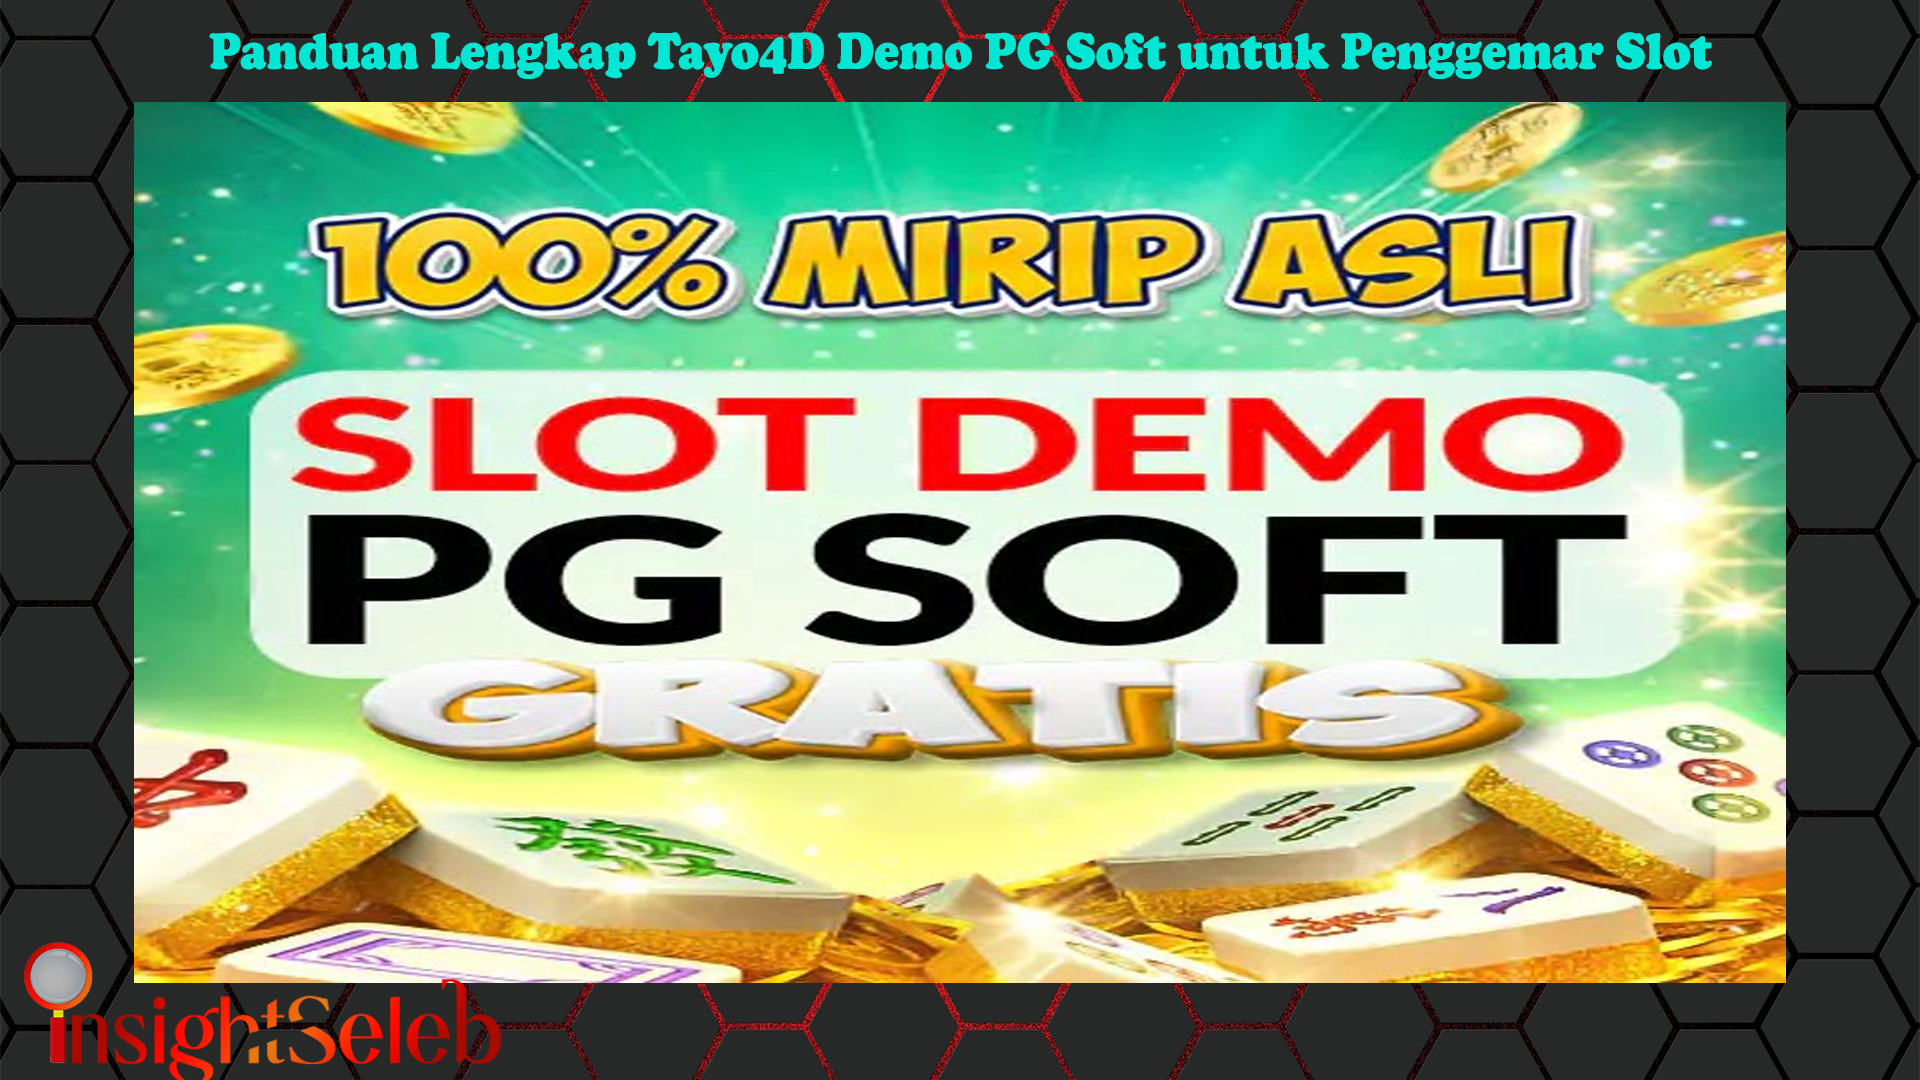 Panduan Lengkap Tayo4D Demo PG Soft untuk Penggemar Slot